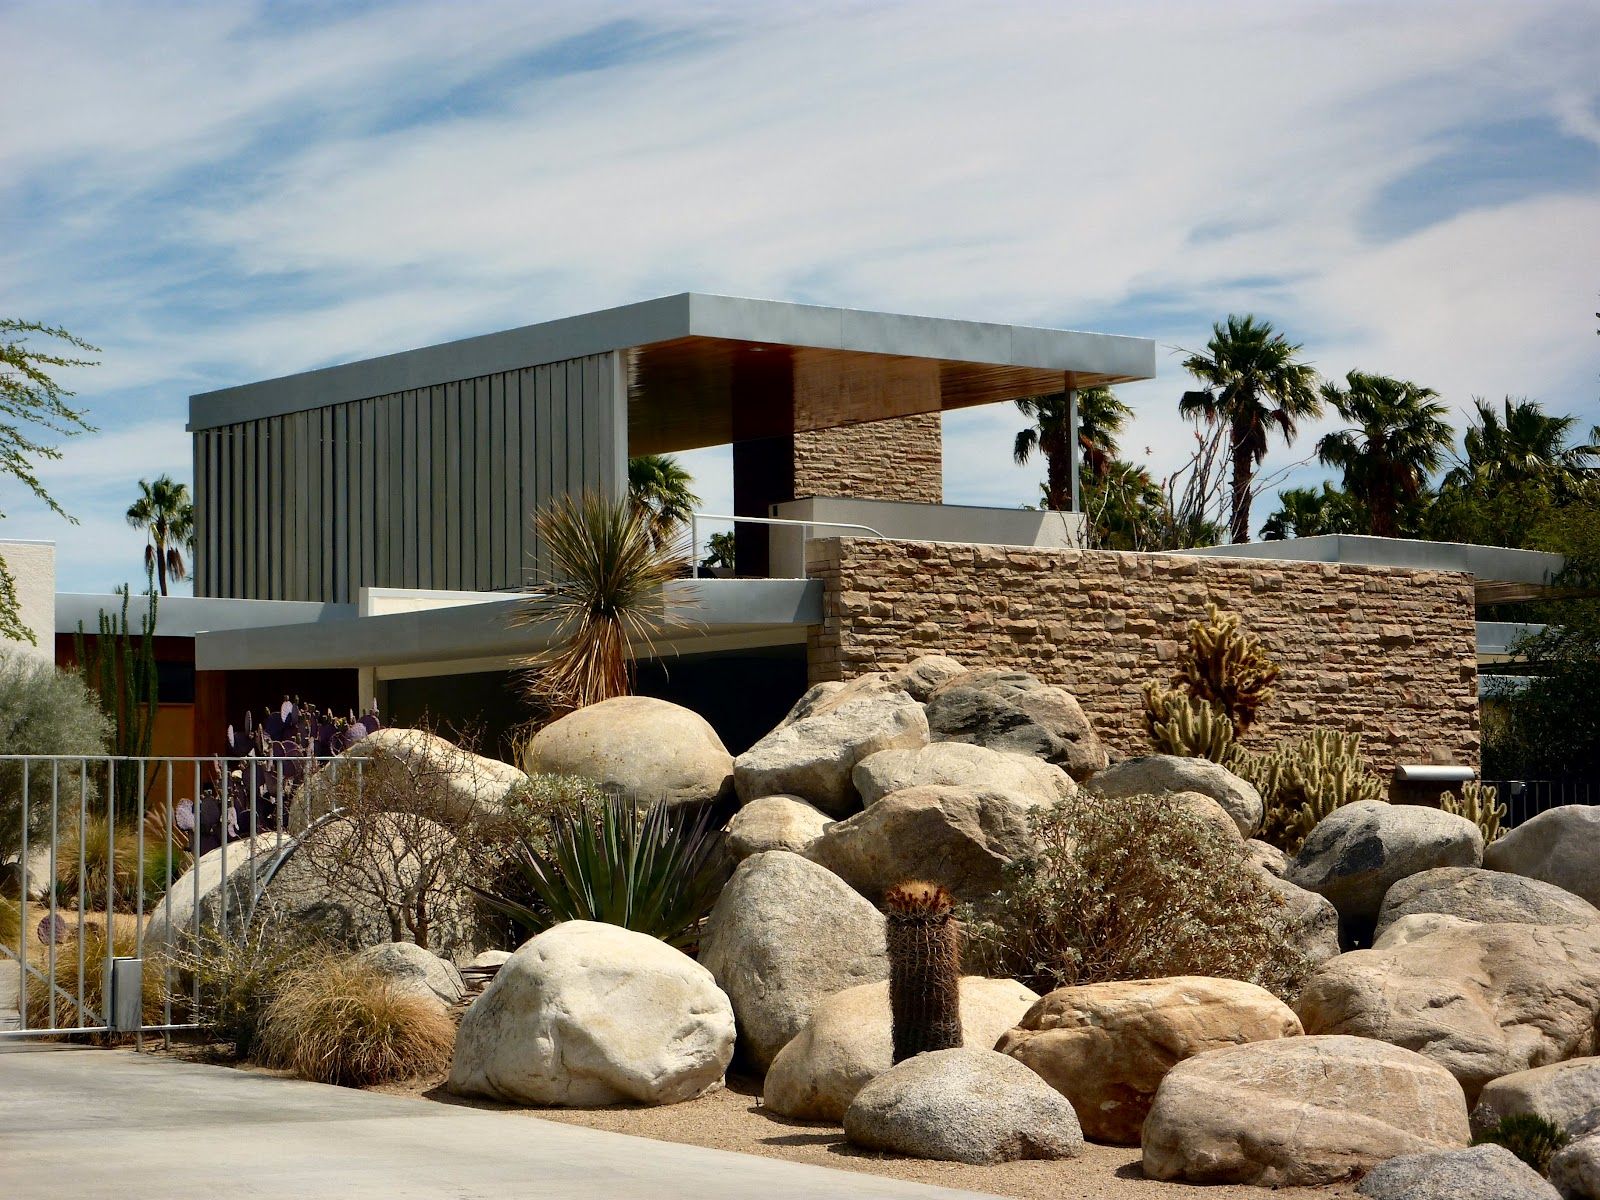 Palm Springs' Desert Modern Architecture